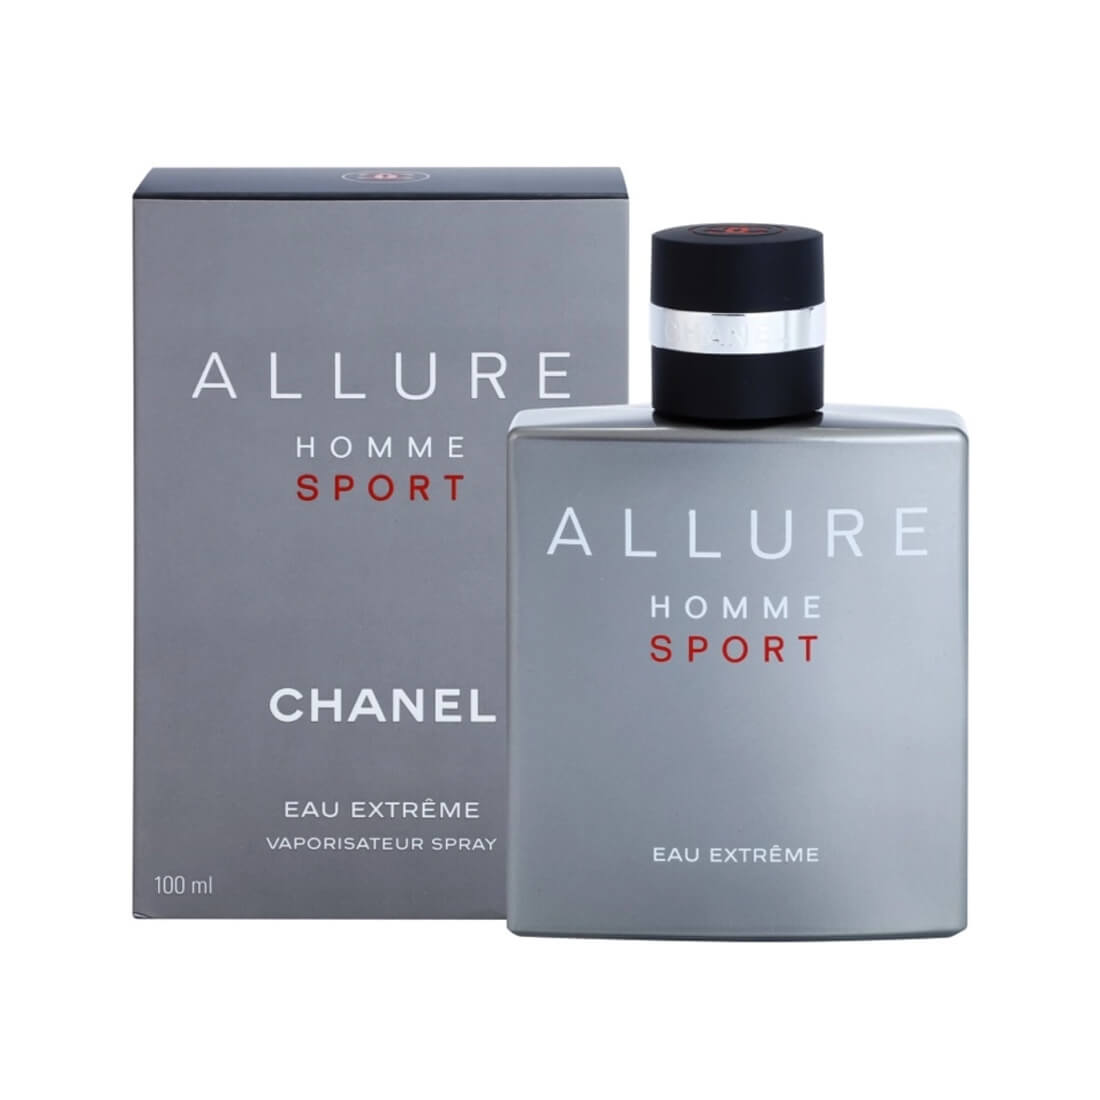 Chanel Allure Homme Sport Eau Extreme Review